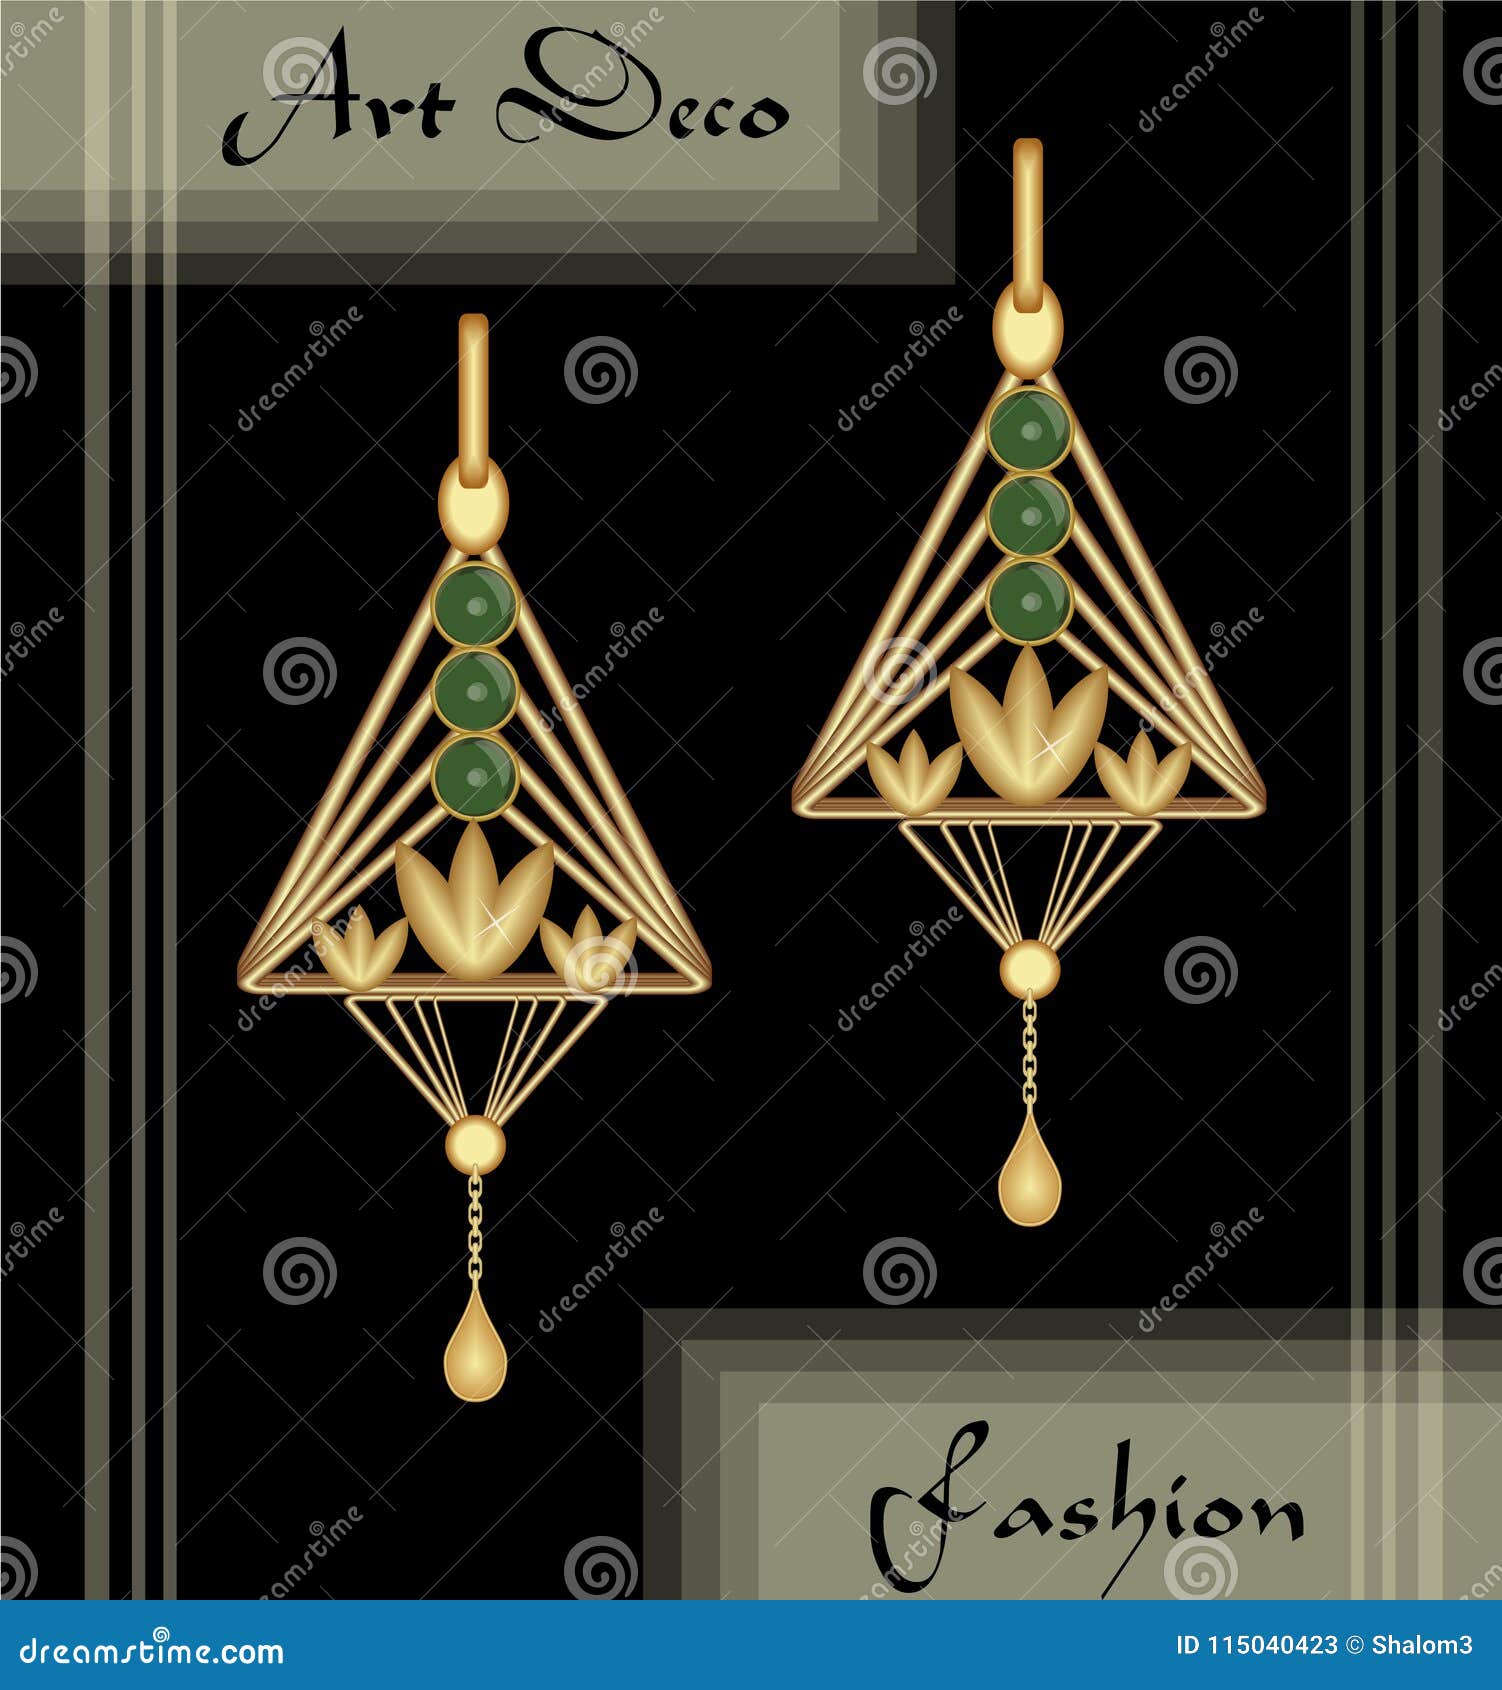 Art Deco Earrings Collection Luxury Golden Stock Vector (Royalty Free)  684050527 | Shutterstock